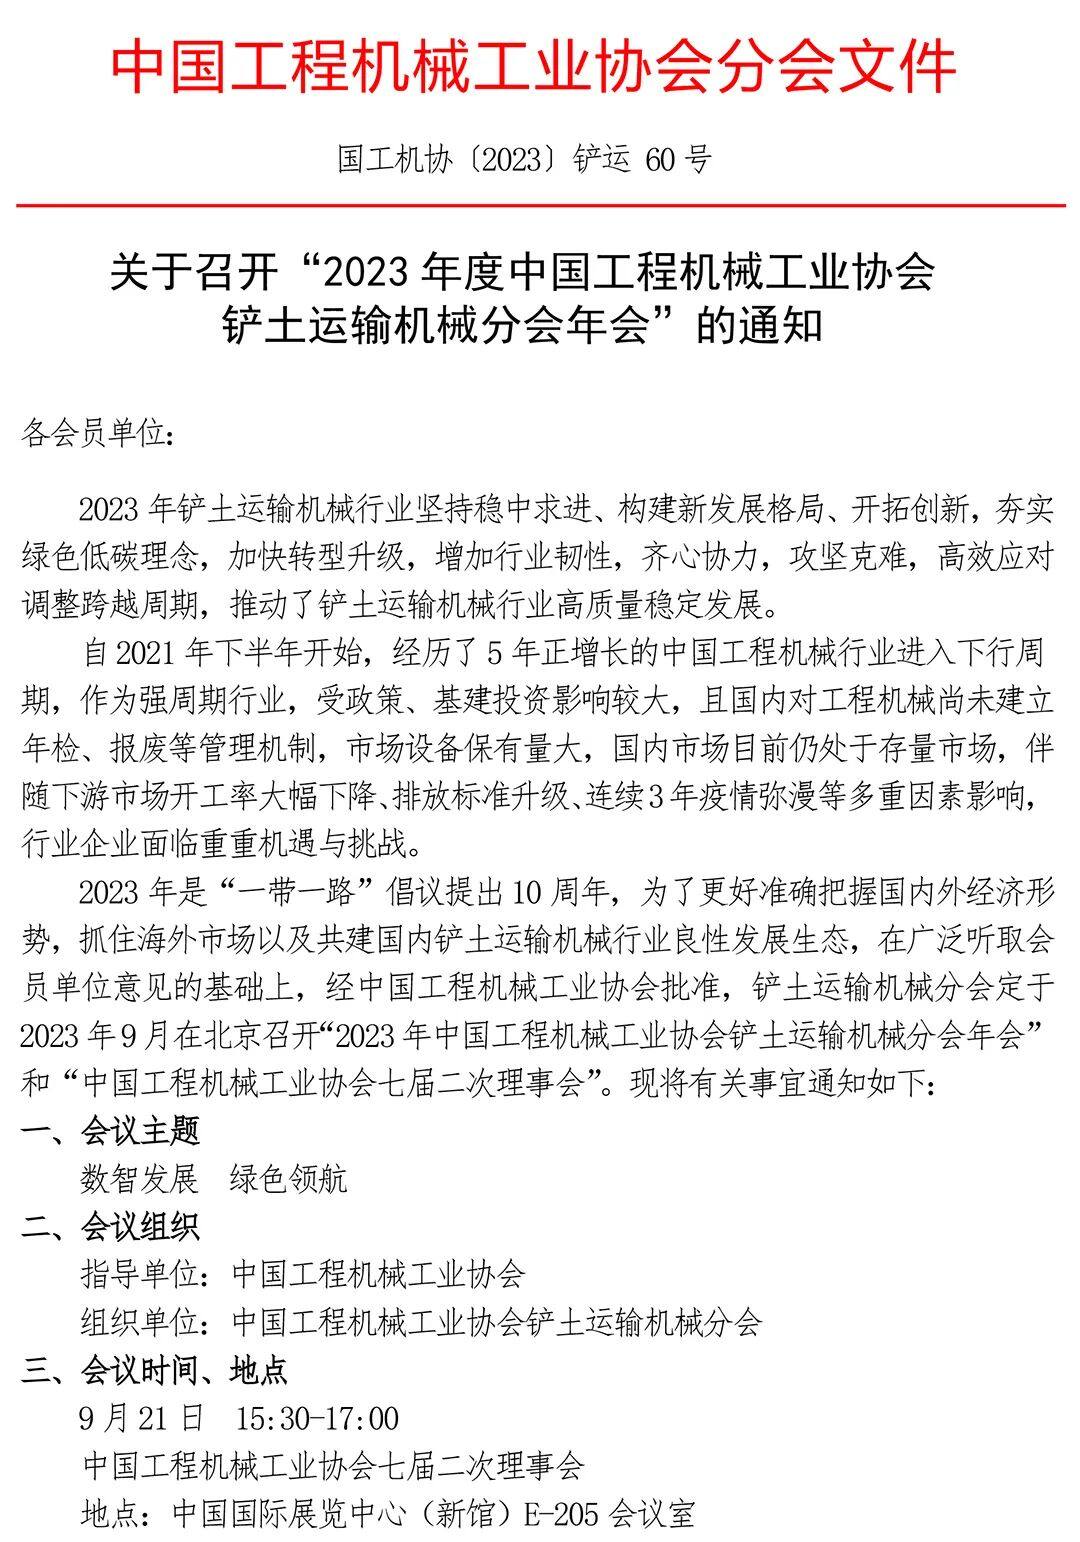 BICES 2023同期行动：对于召开“中国工程机械工业协会铲土运输机械分会年会”的见告